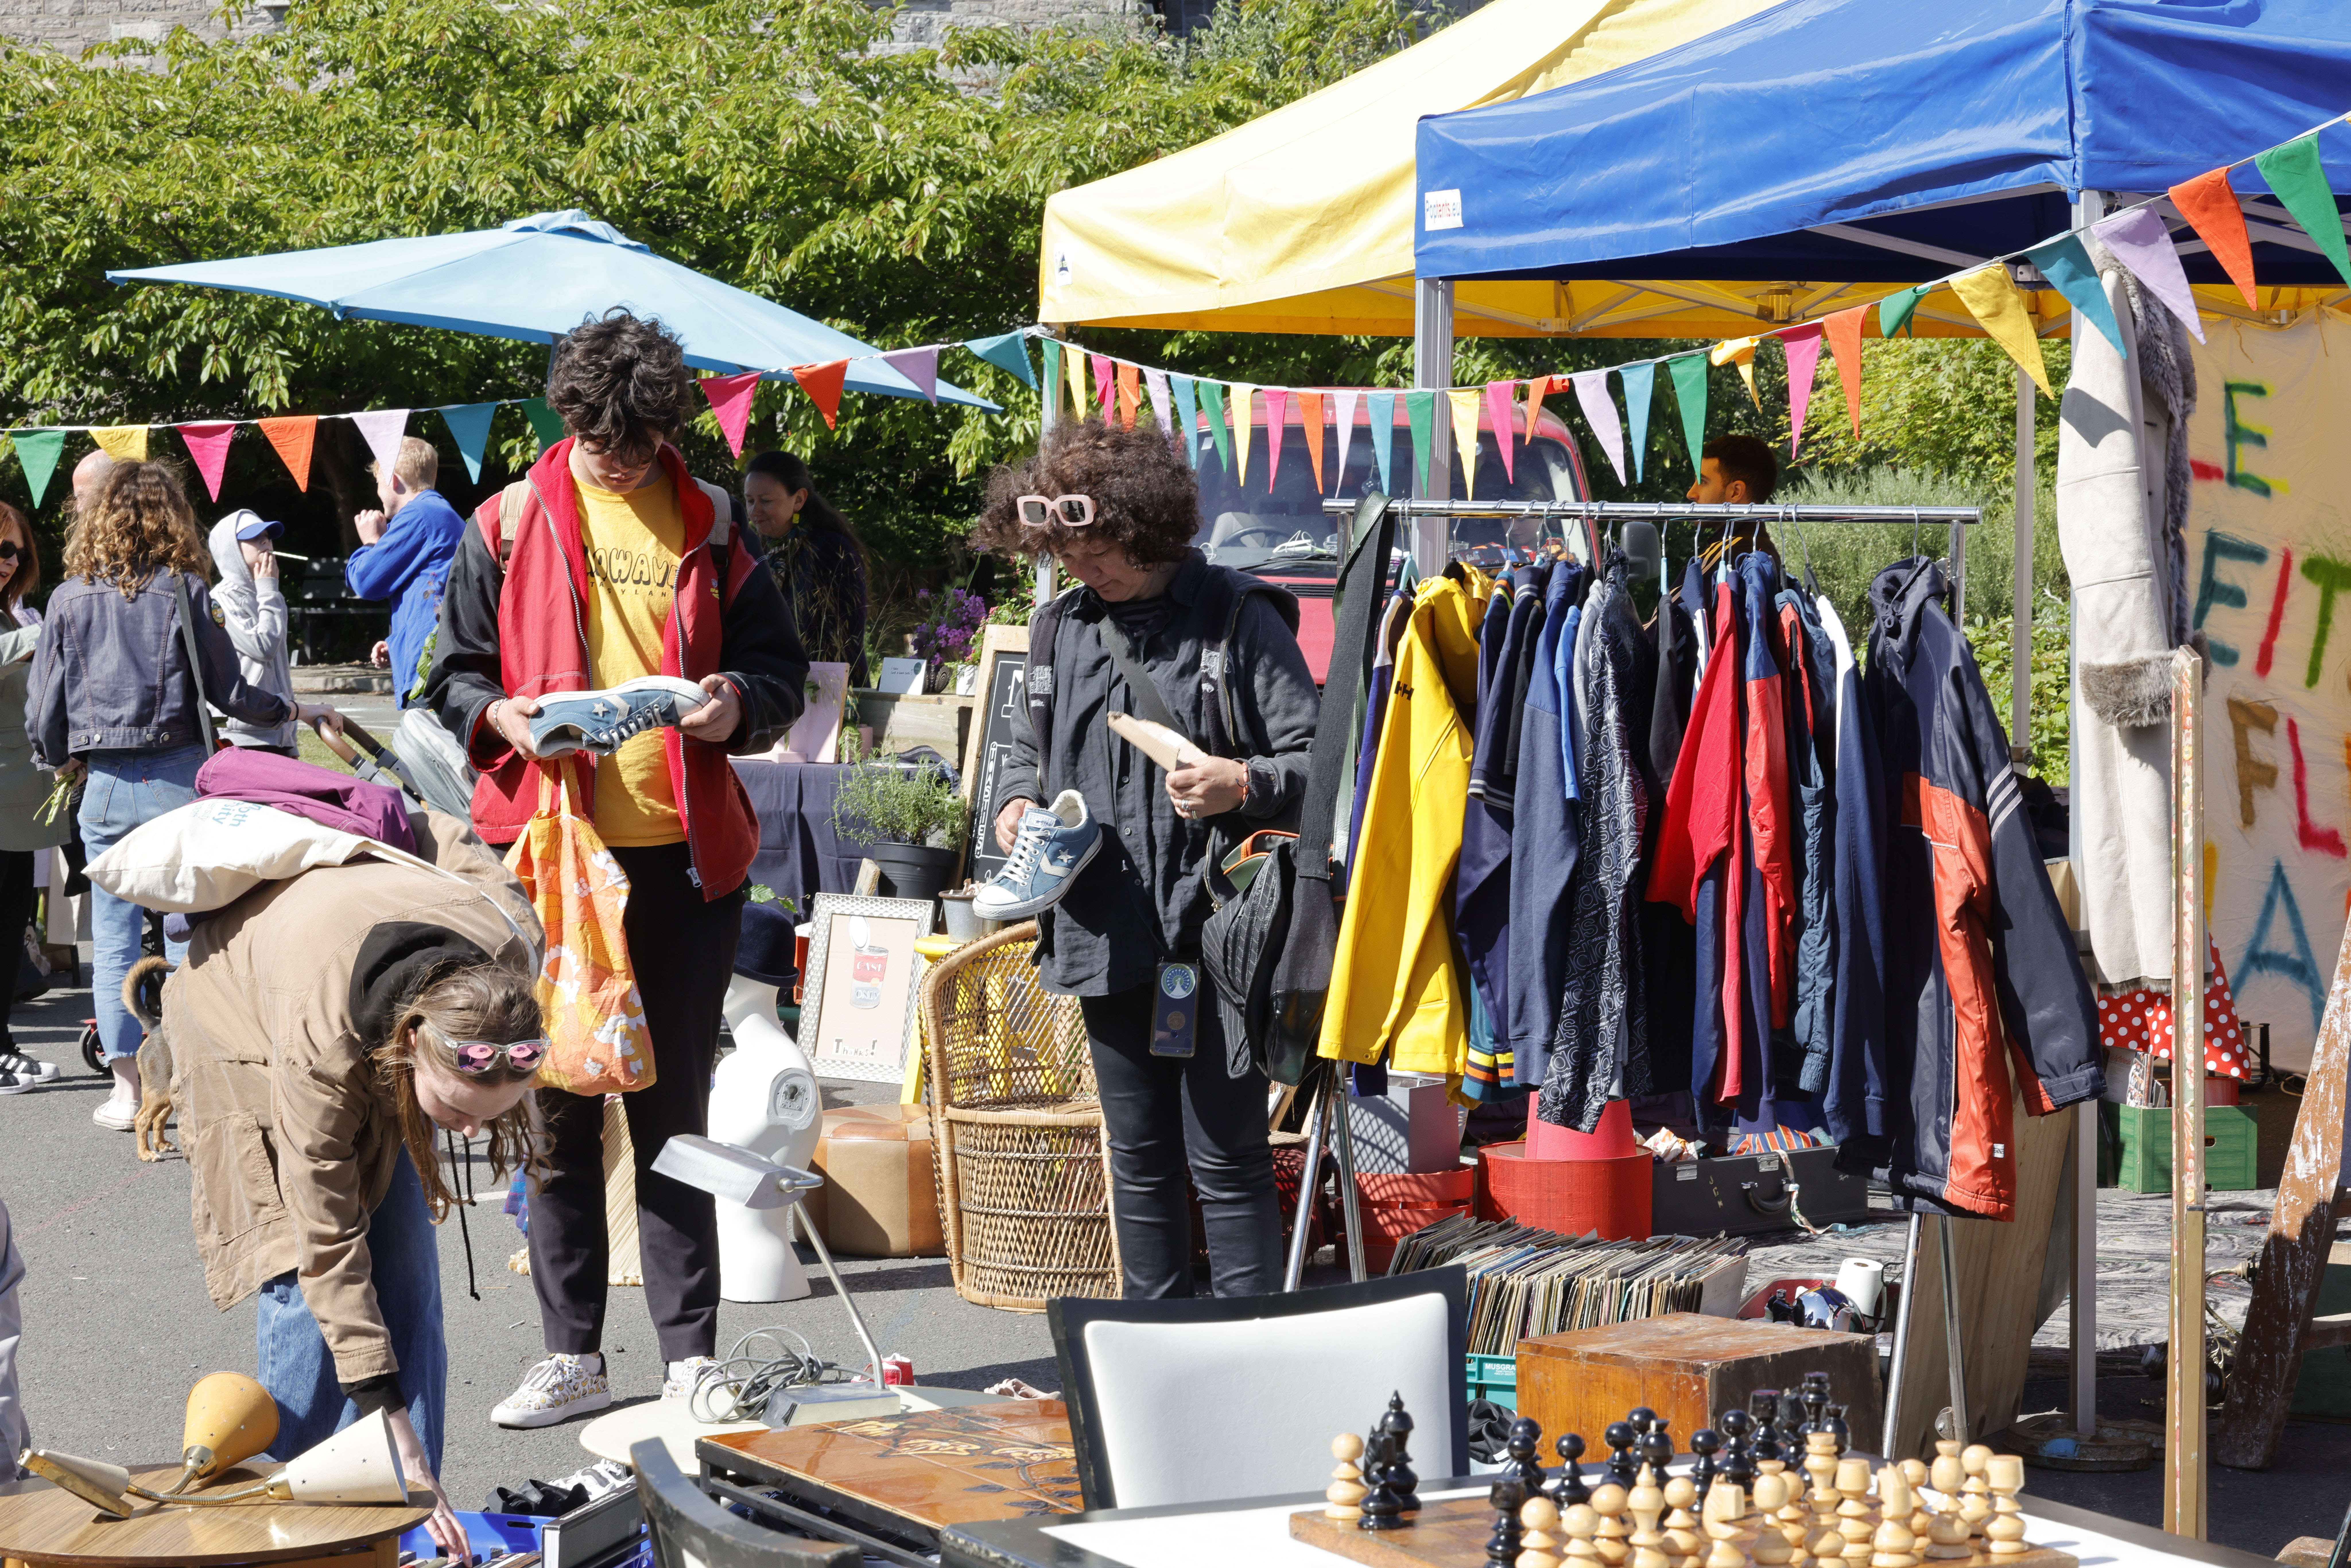 The flea markets 'bringing the magic back' to Dublin – Irish Times